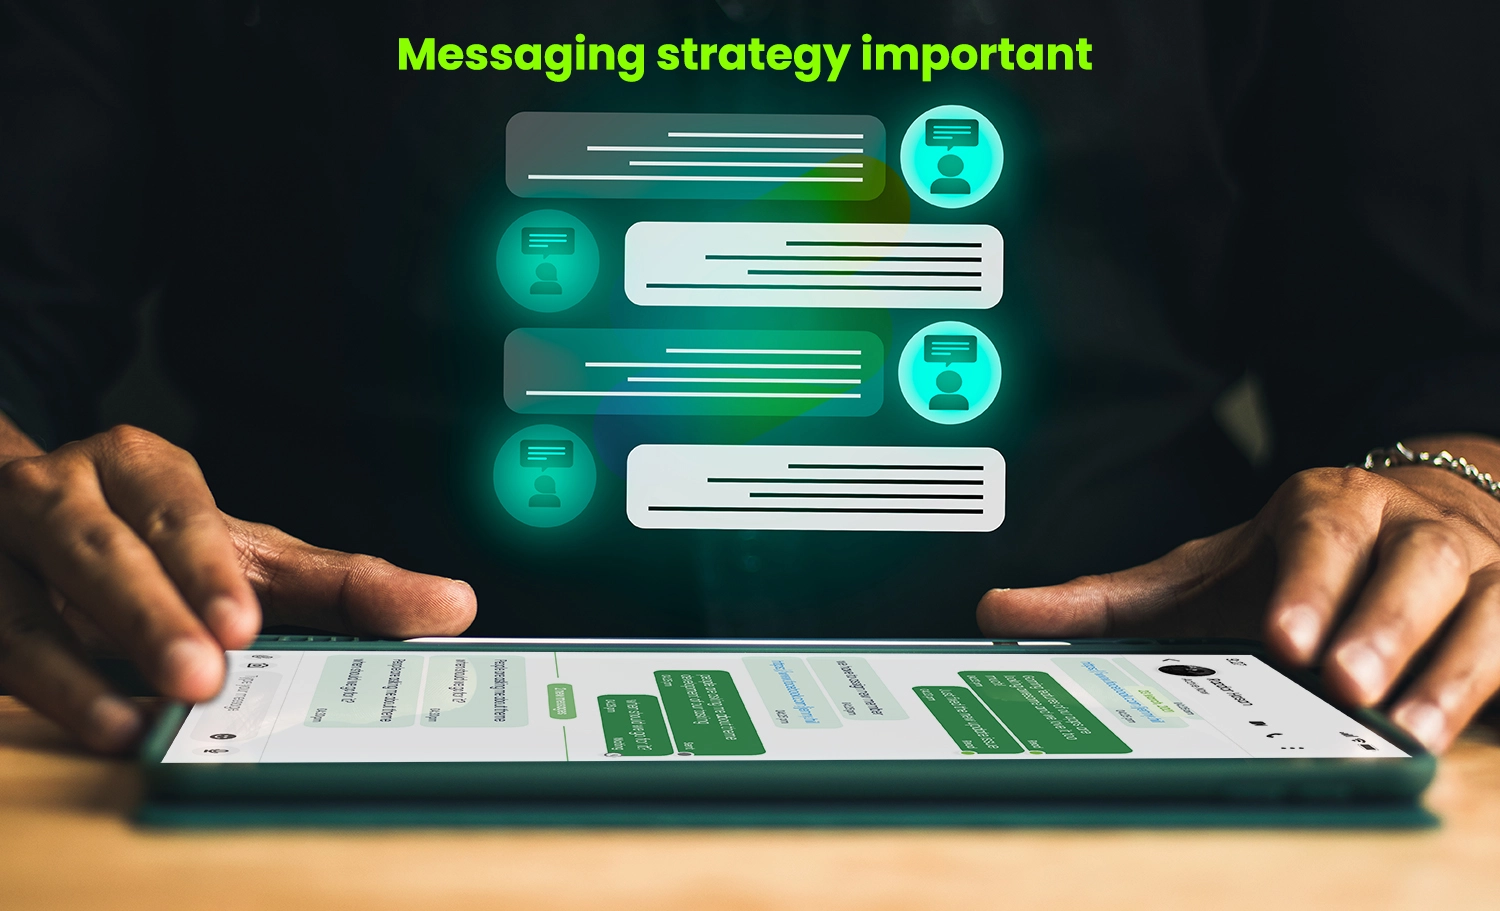 Cross-platform messaging strategy important